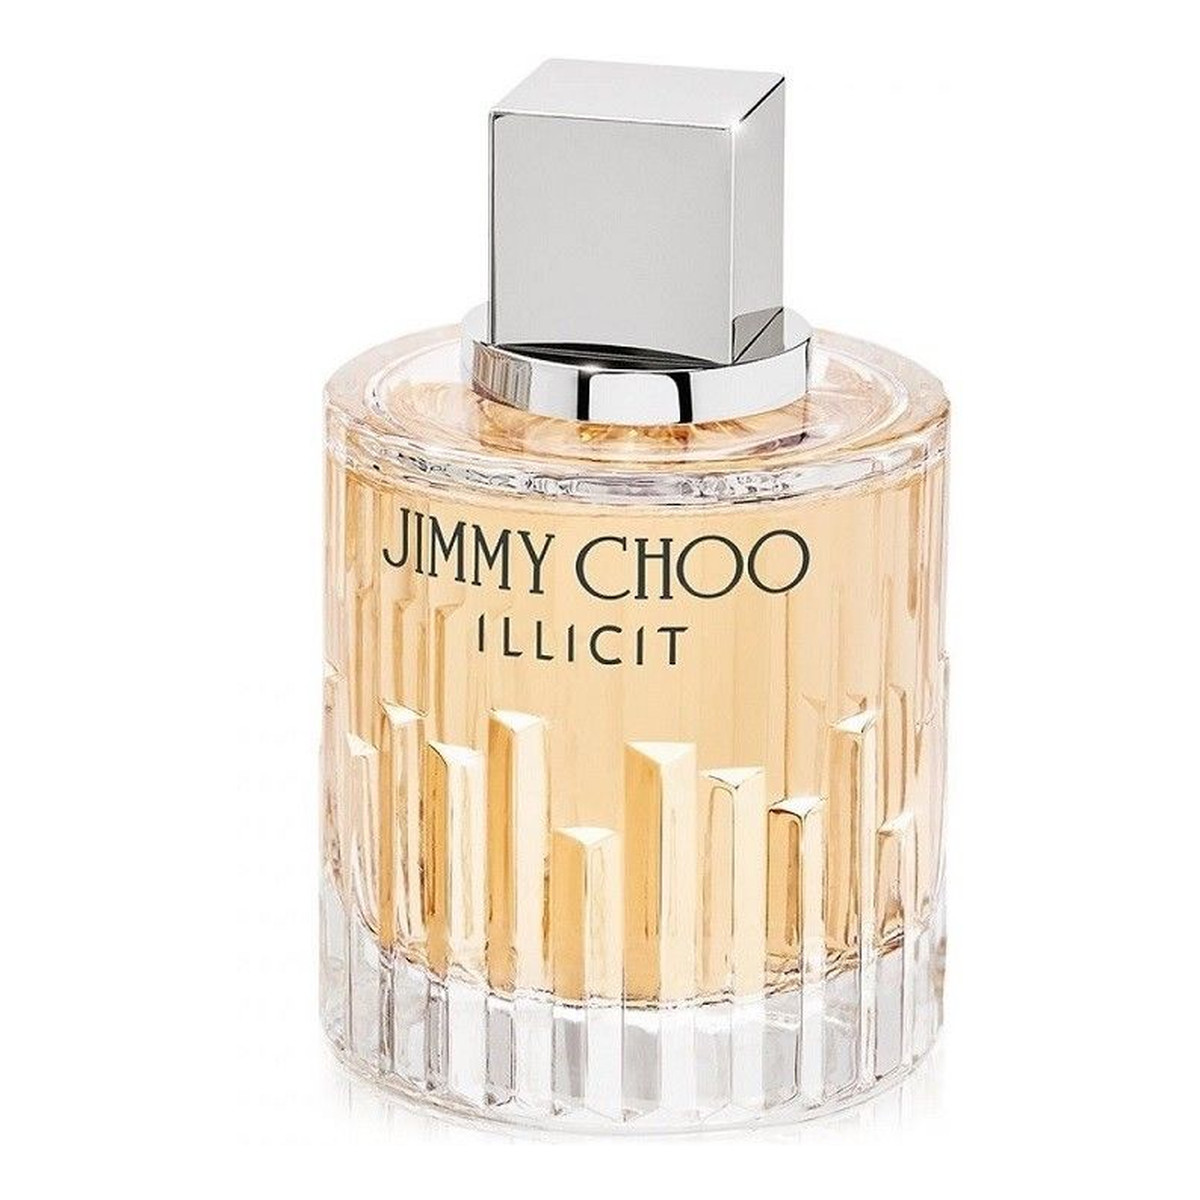 Jimmy Choo Illicit woda perfumowana 40ml